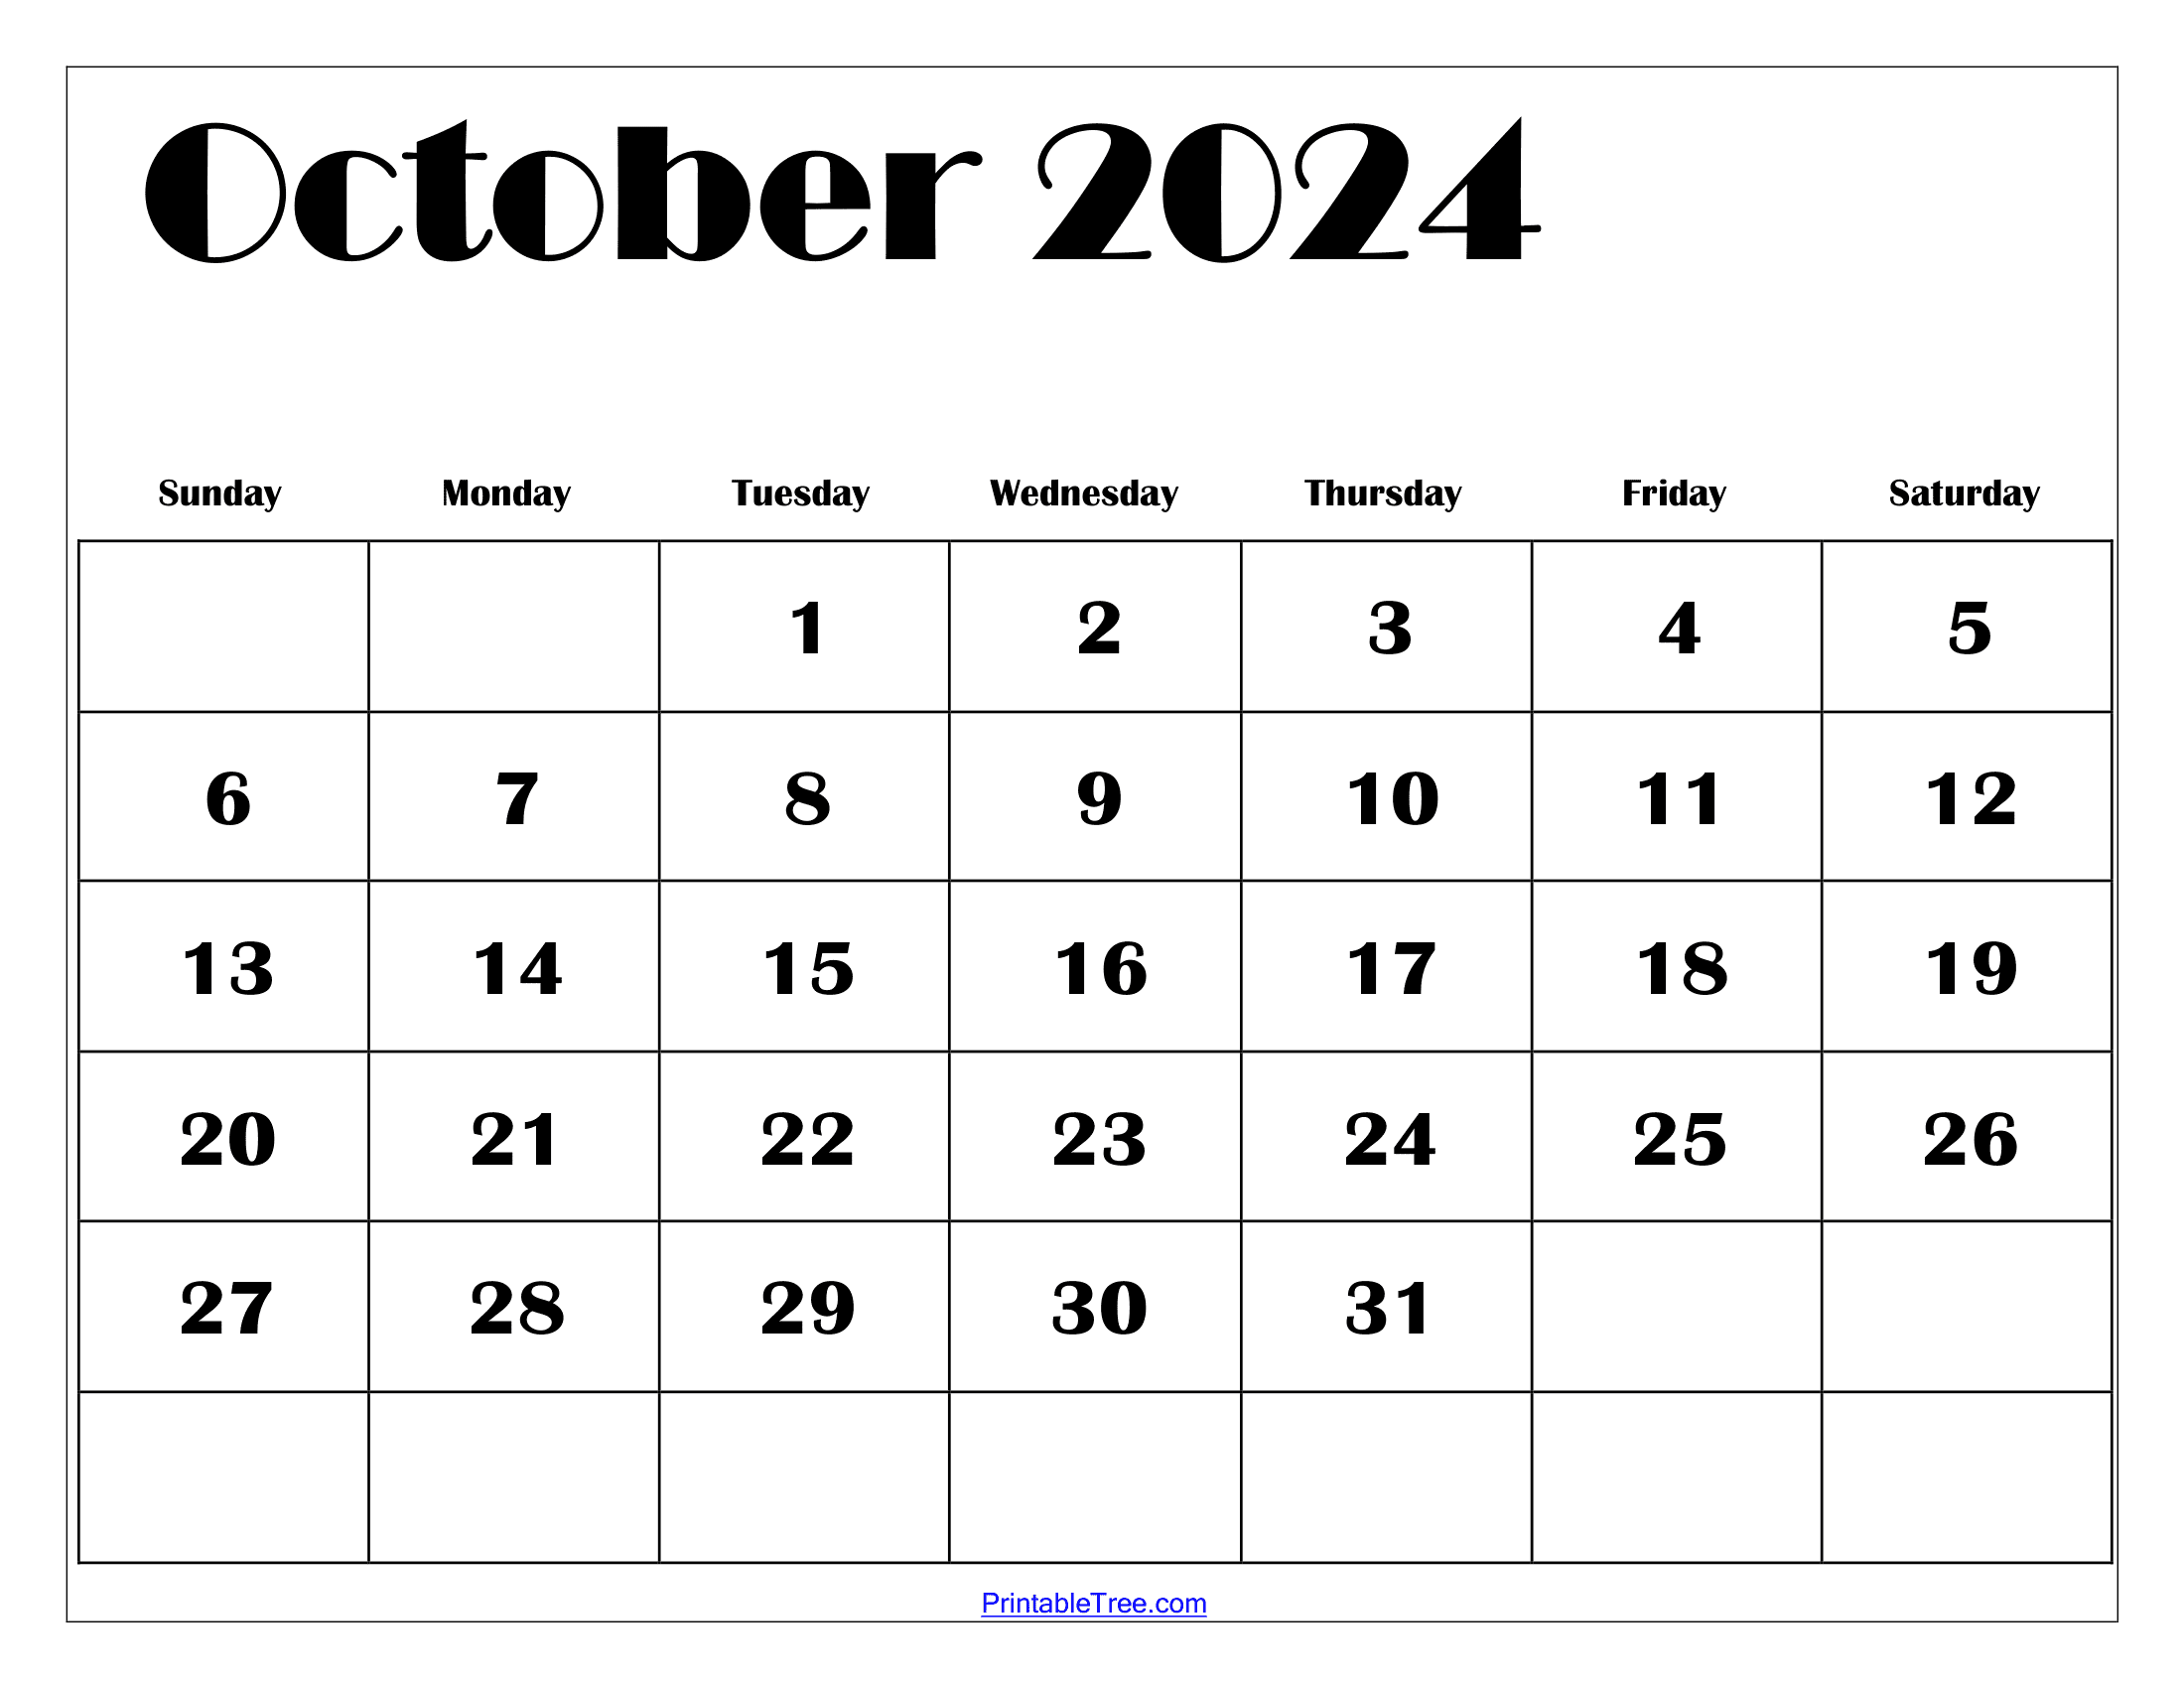 October 2024 Calendar Printable Pdf Free Templates With Holidays for Calendar 2024 October Printable